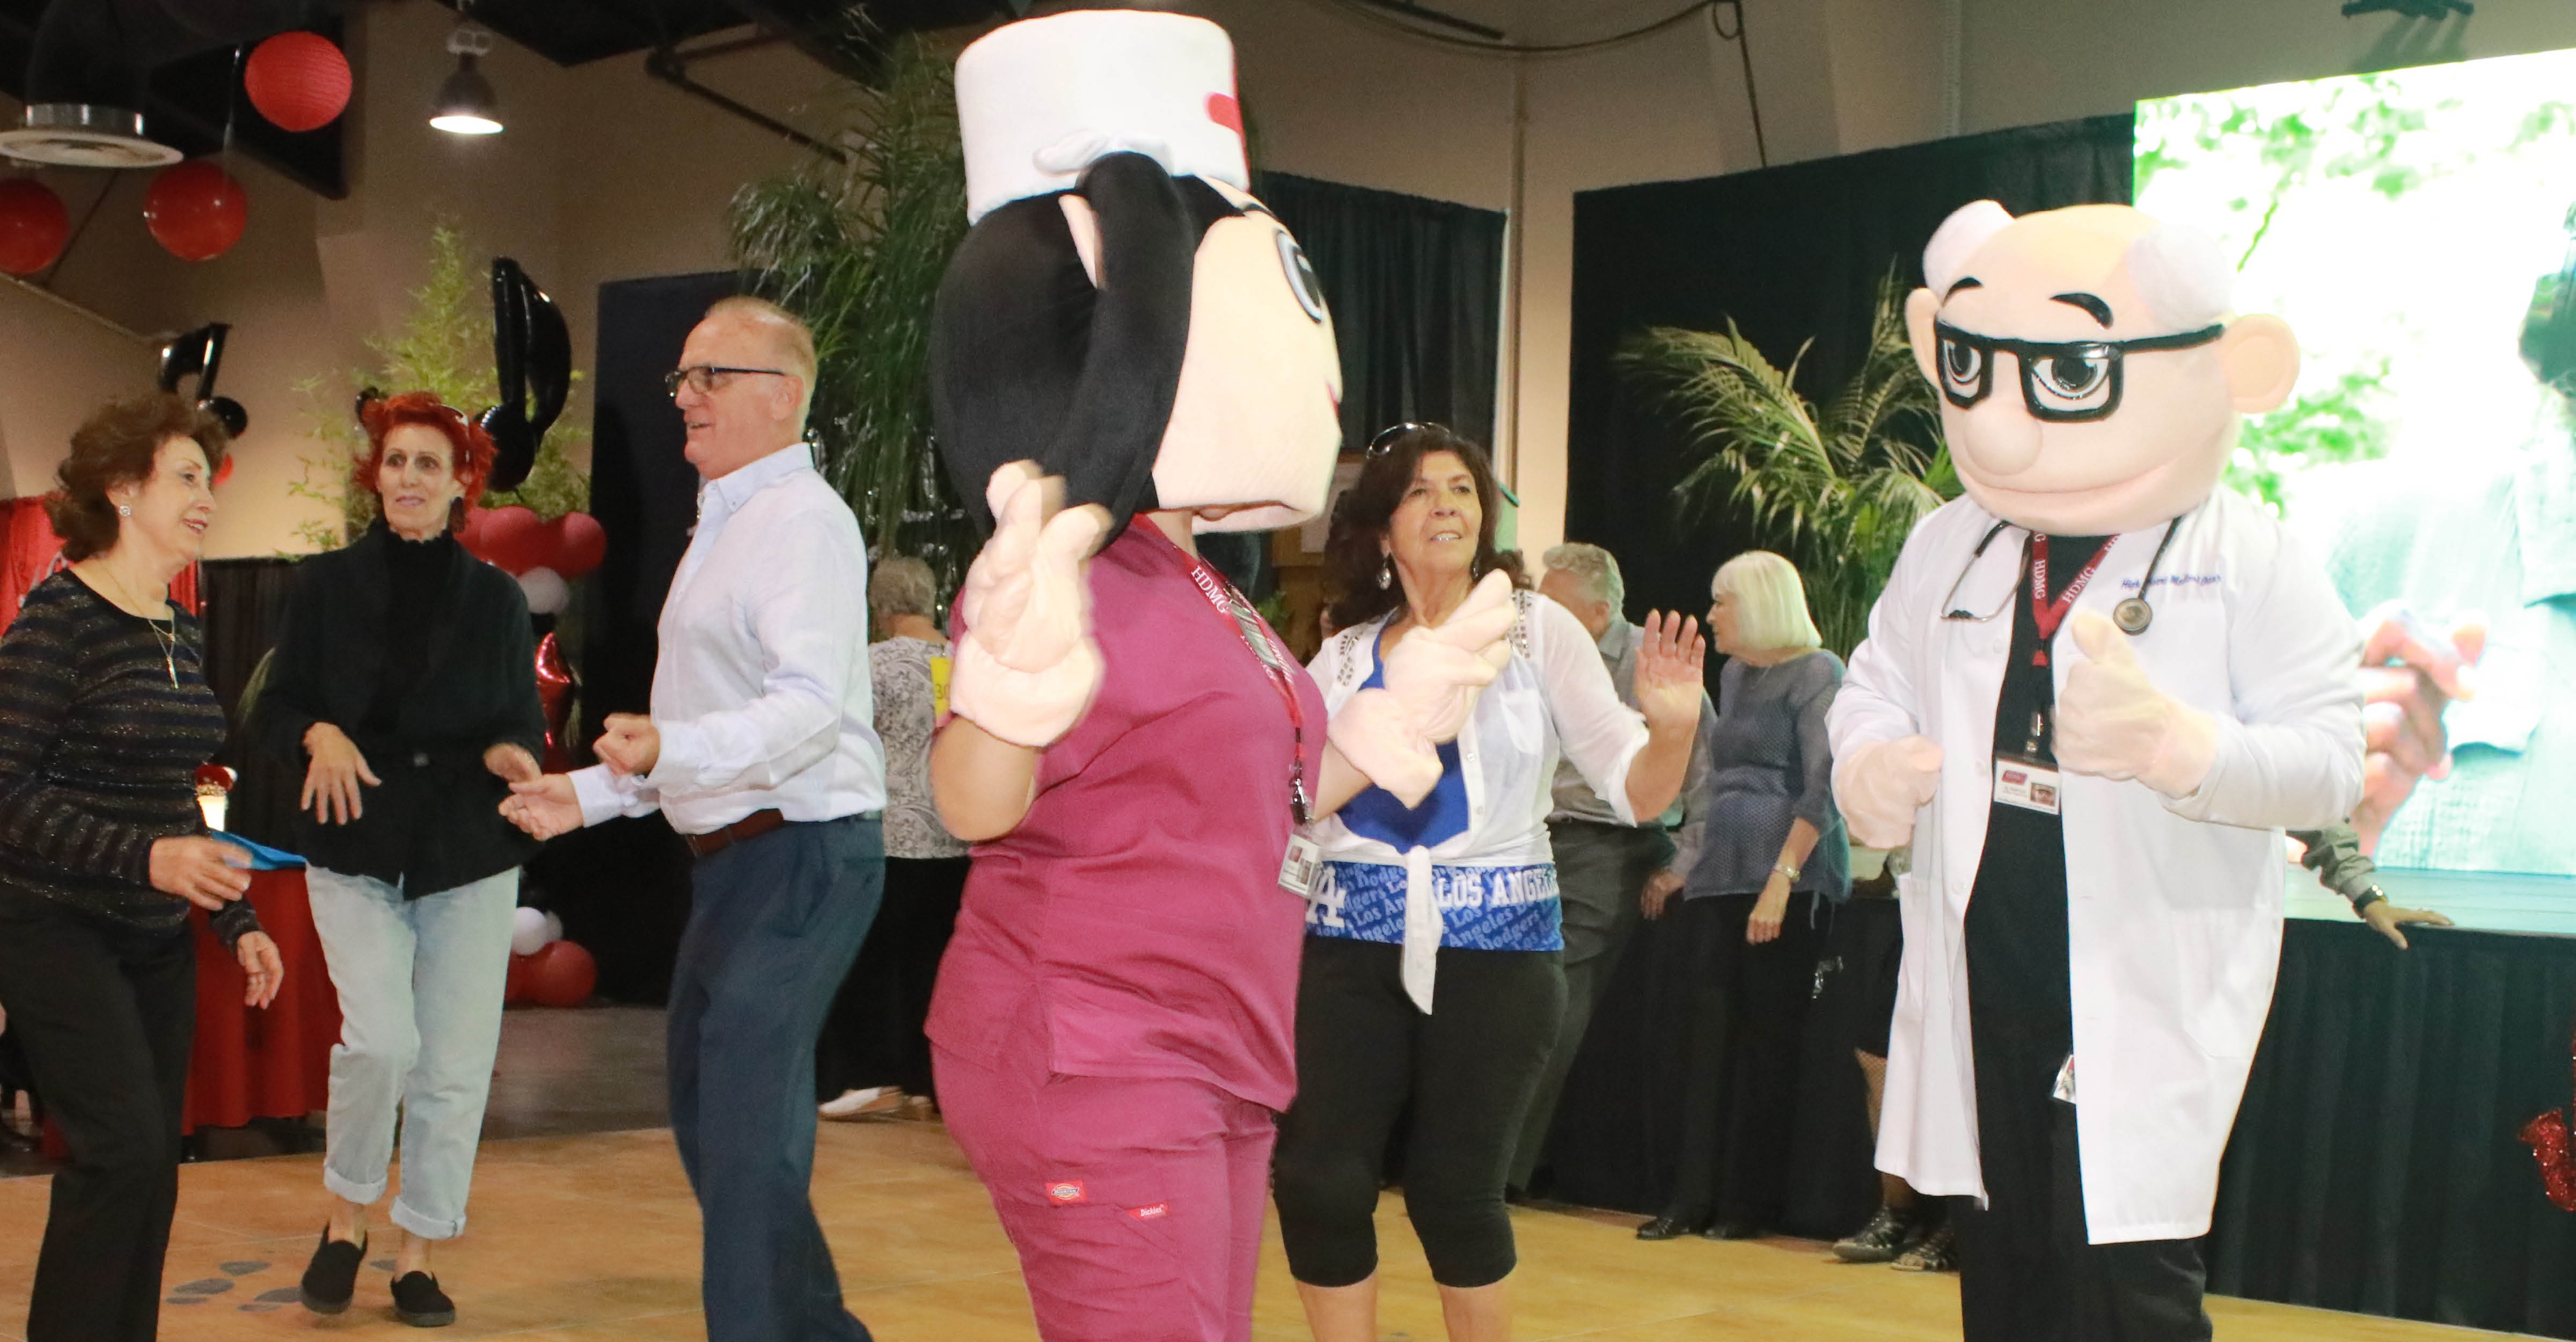 Dr. and Nurse Mascotts Dancing